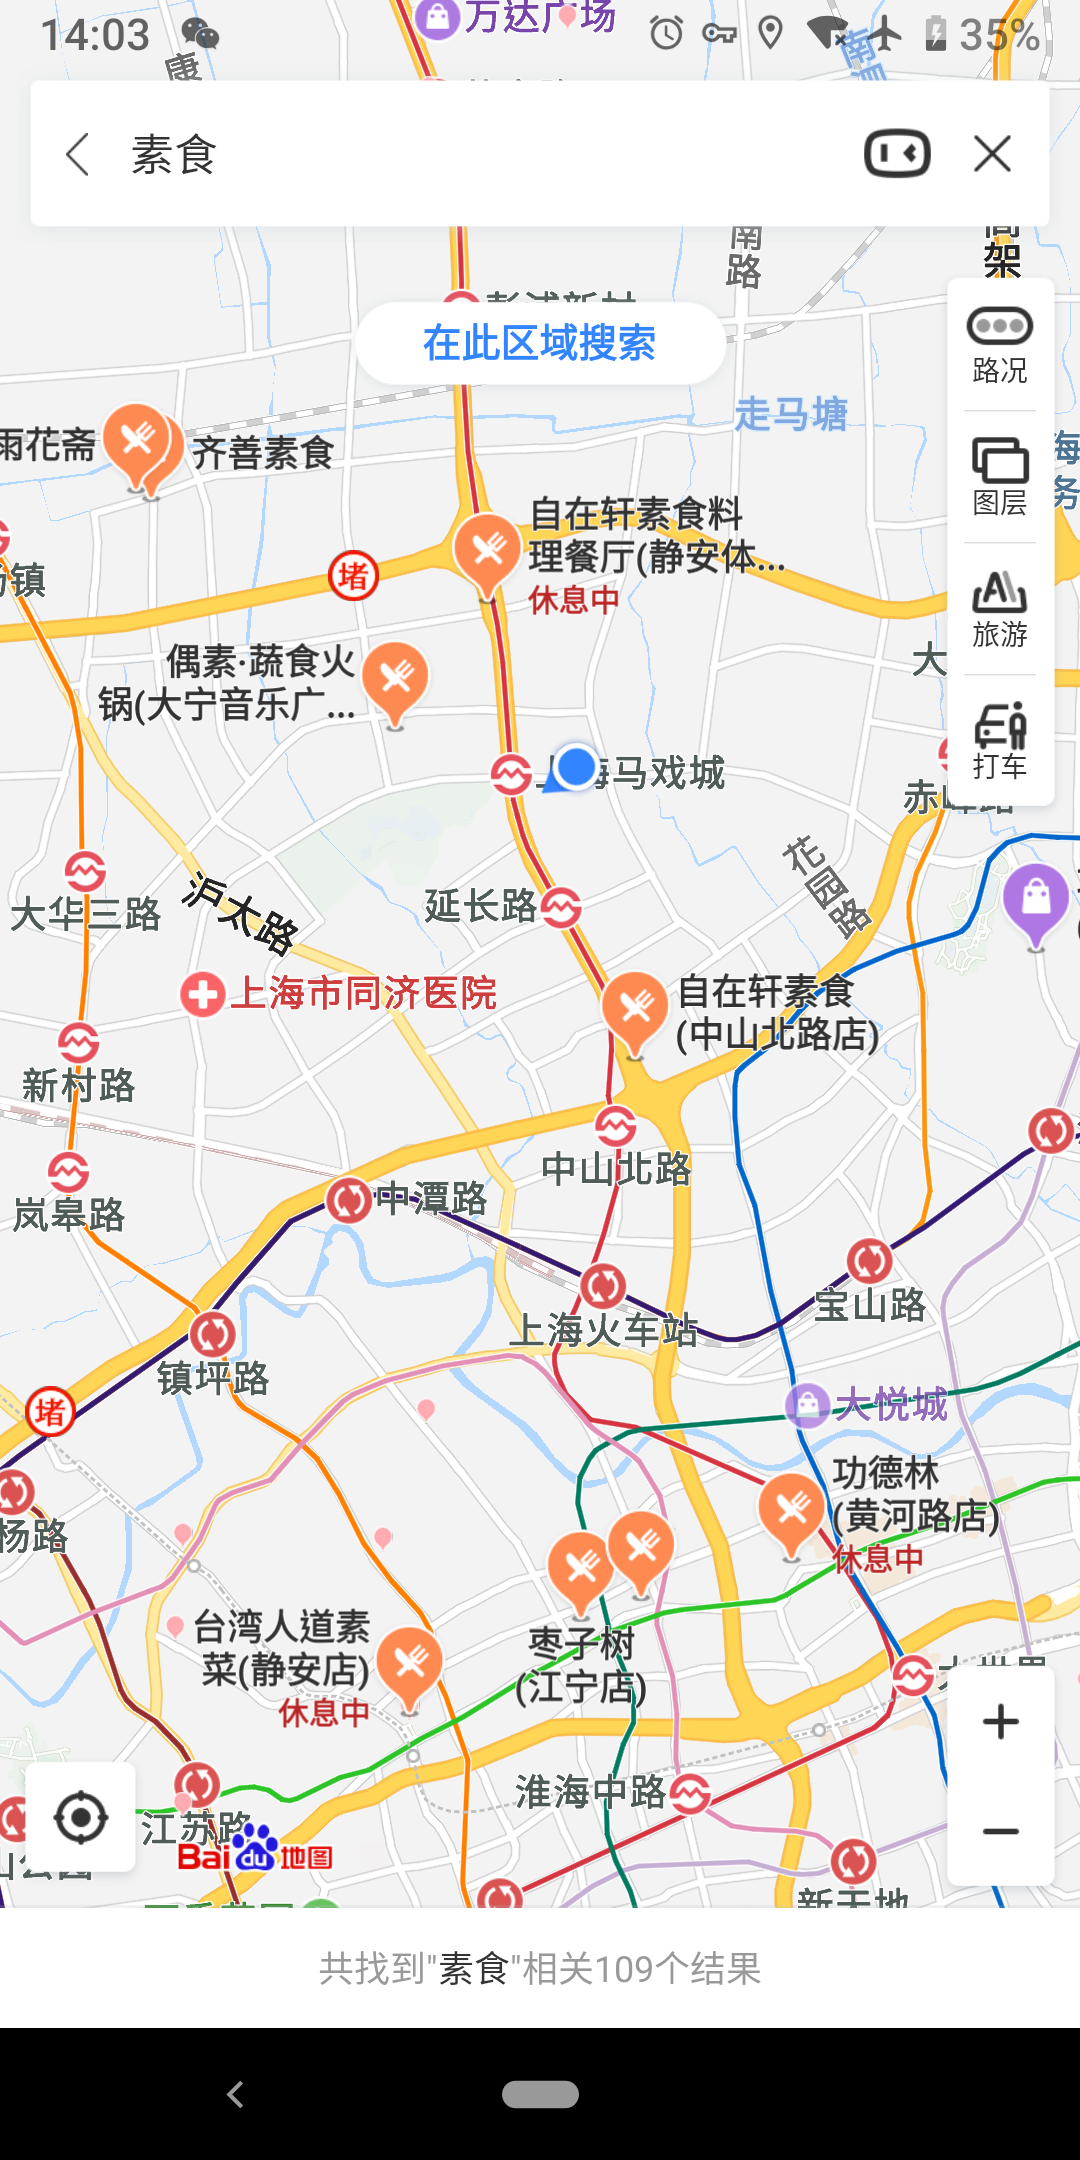 Baidu map